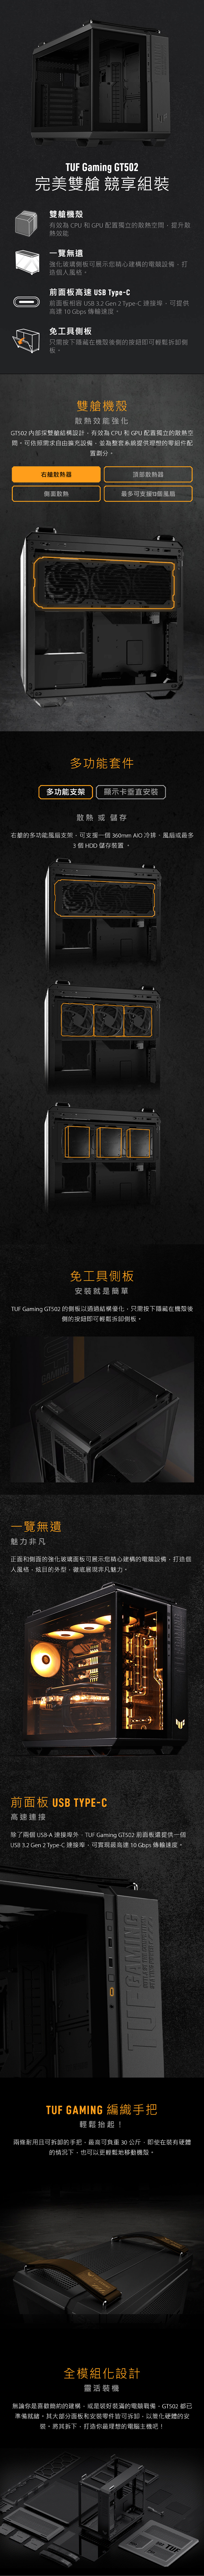 ASUS-華碩-TUF-Gaming-GT502-內.jpg